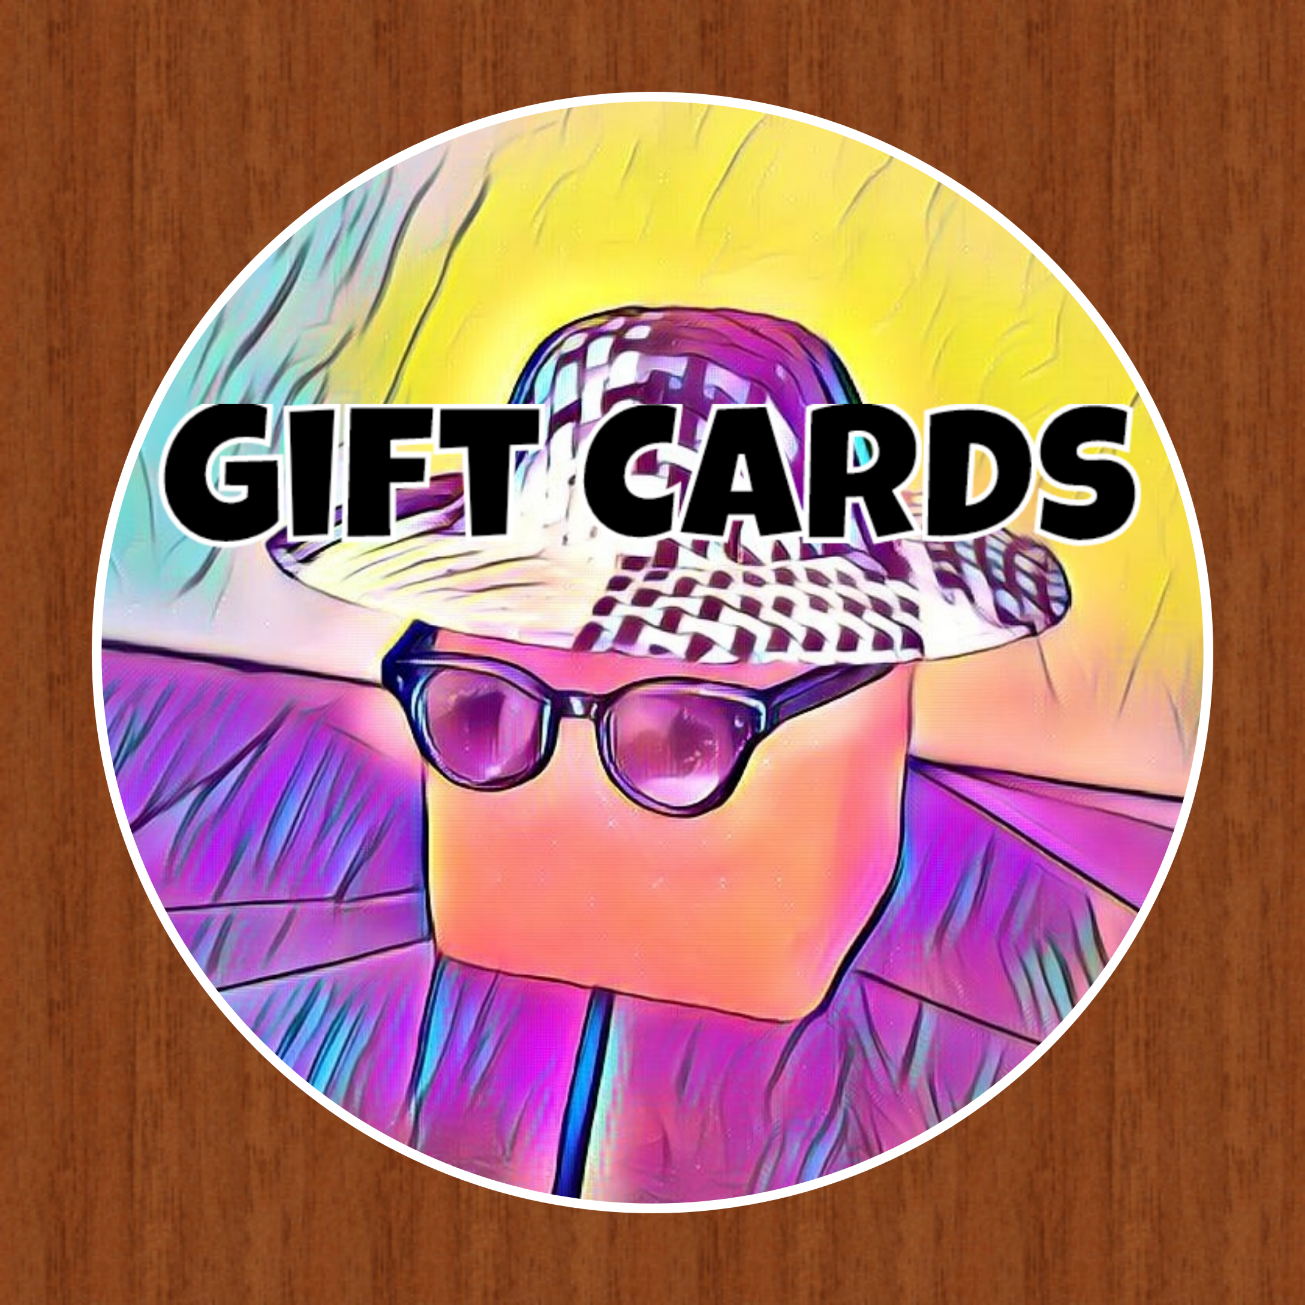 Gift card (Digital)